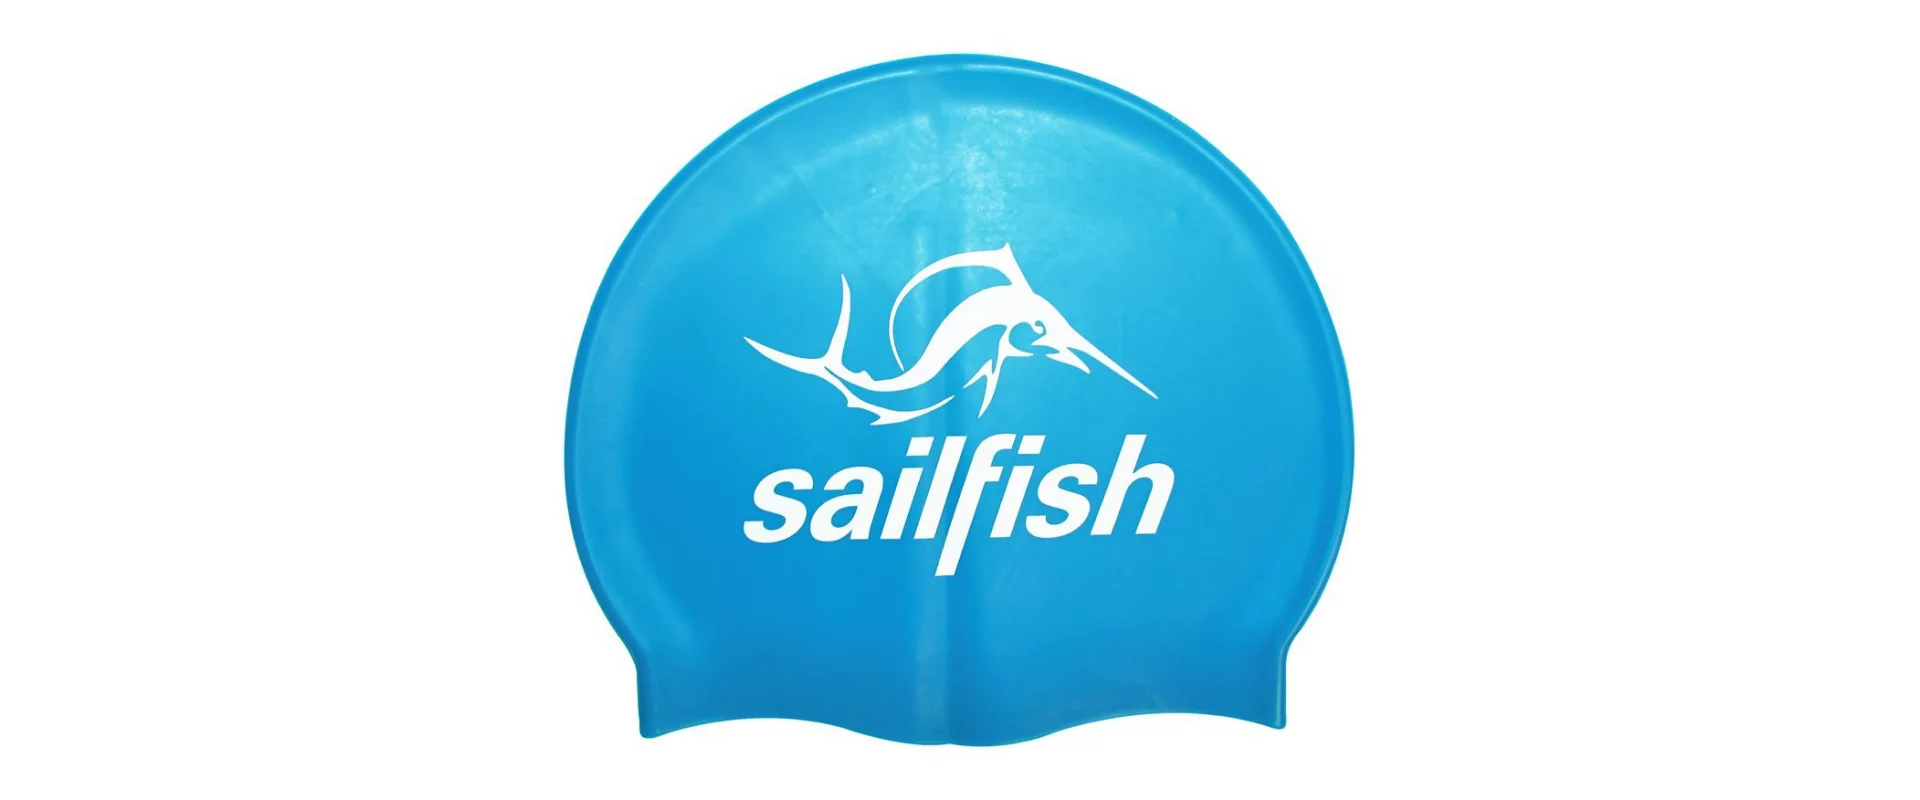 SailFish Silicon Cap Blue